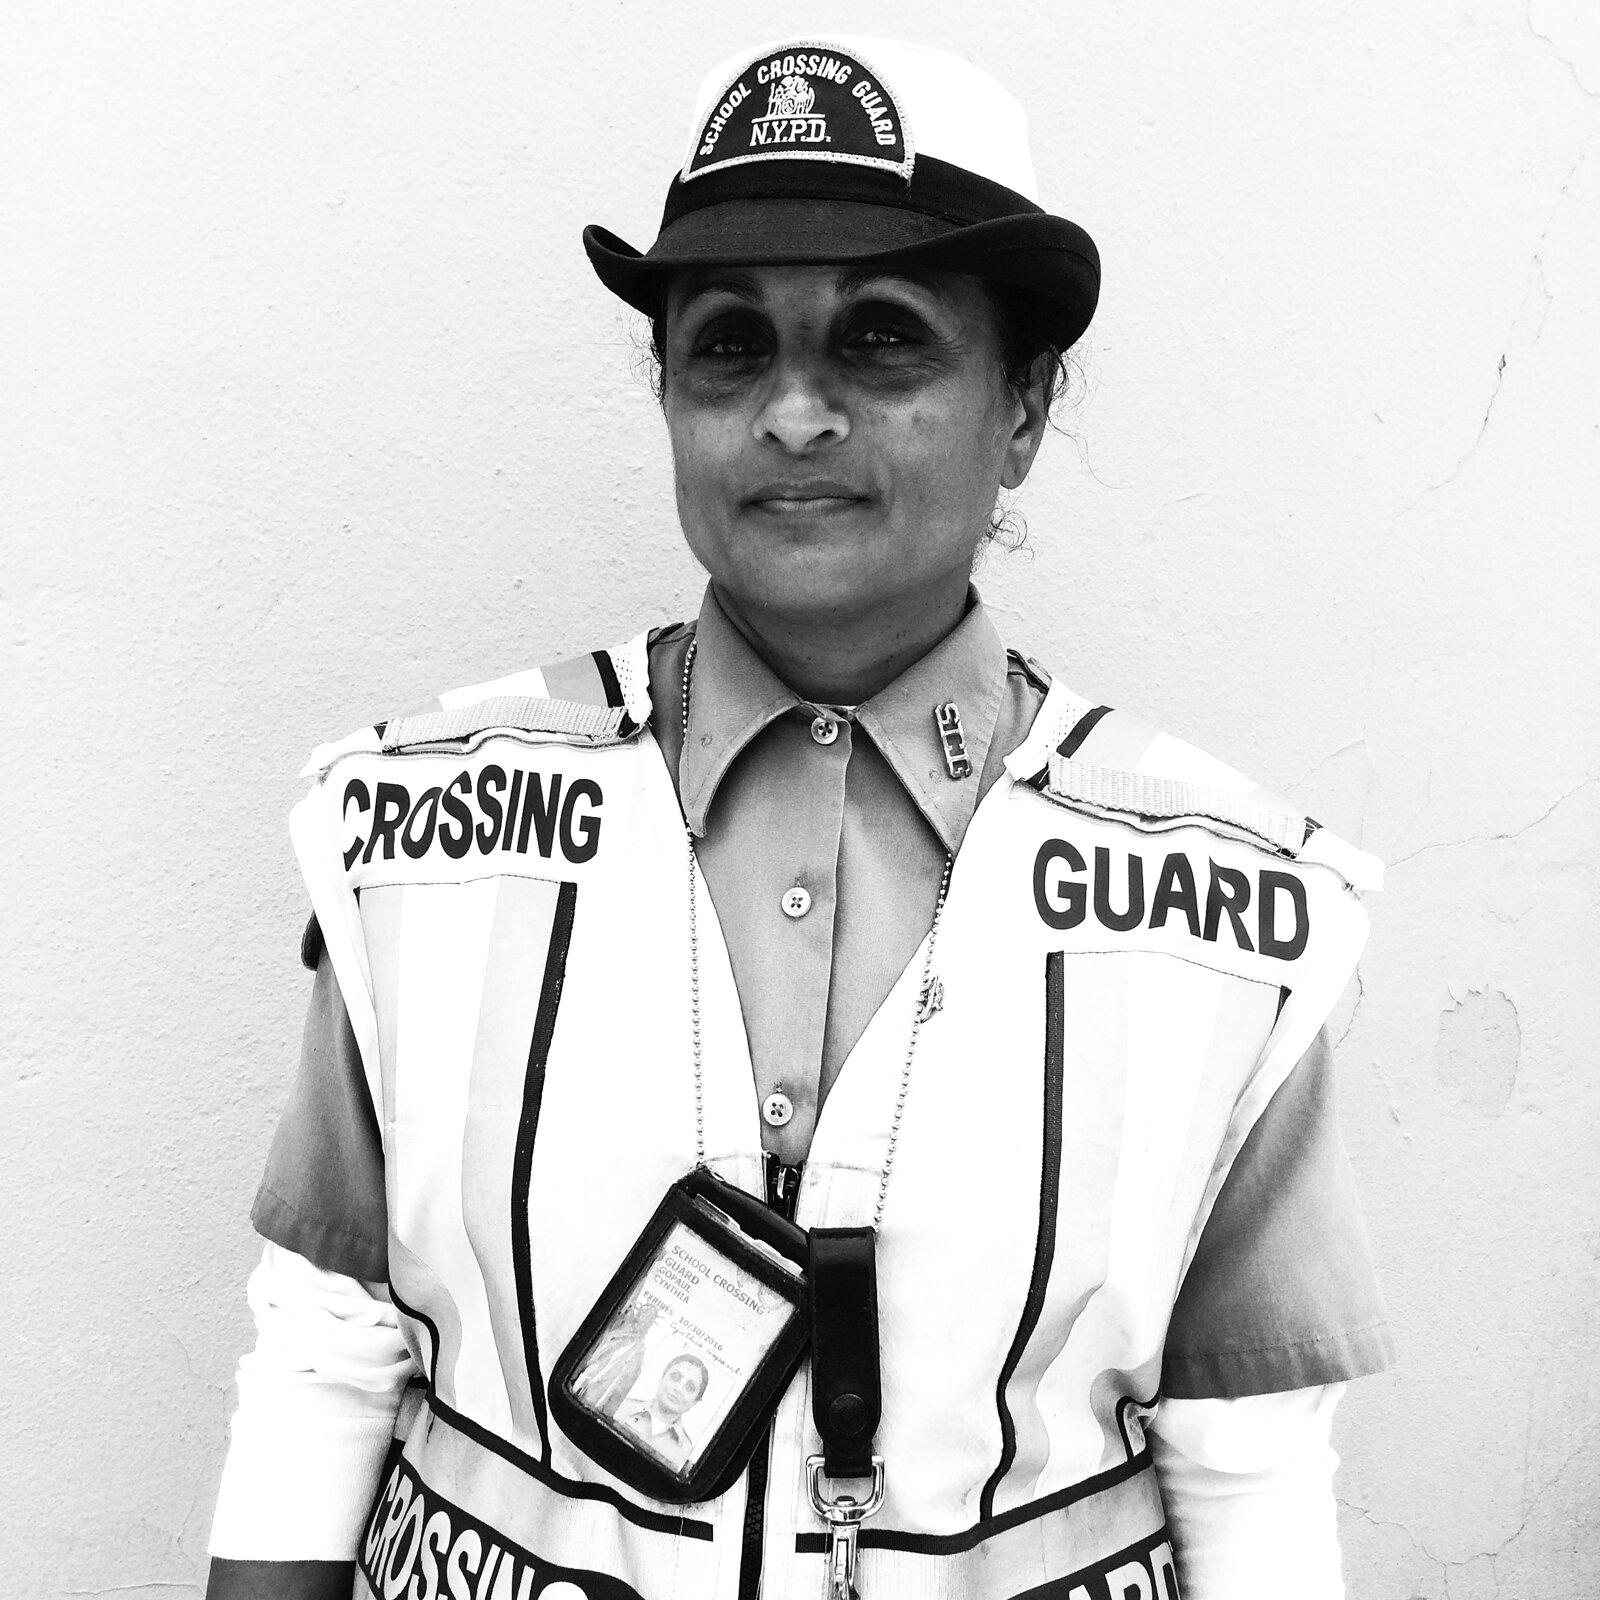 Cynthia, crossing guard. Greenpoint, Brooklyn. July 1st, 2015.